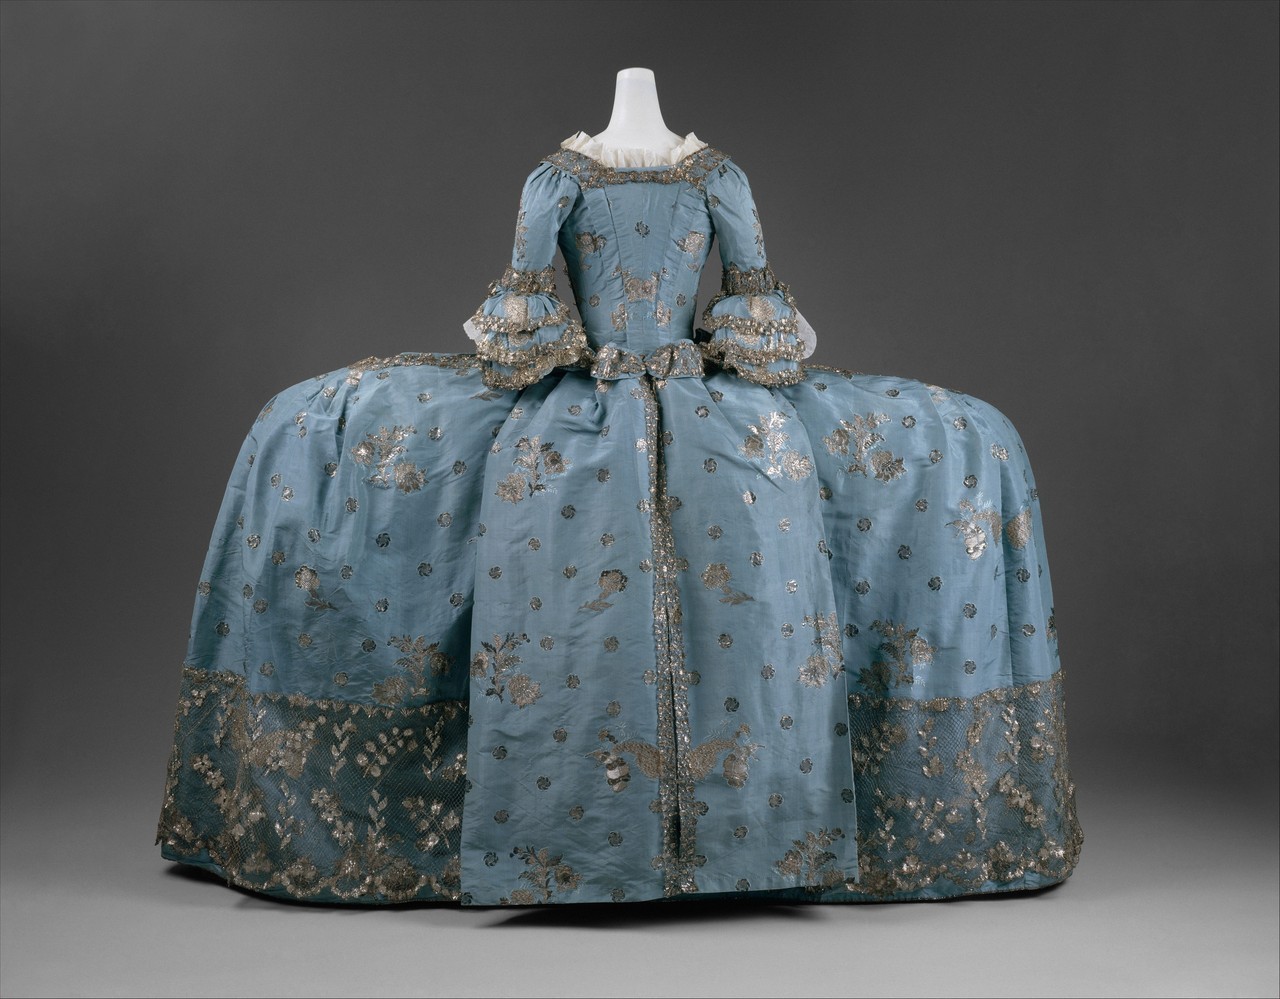 18th century women's clothing layers